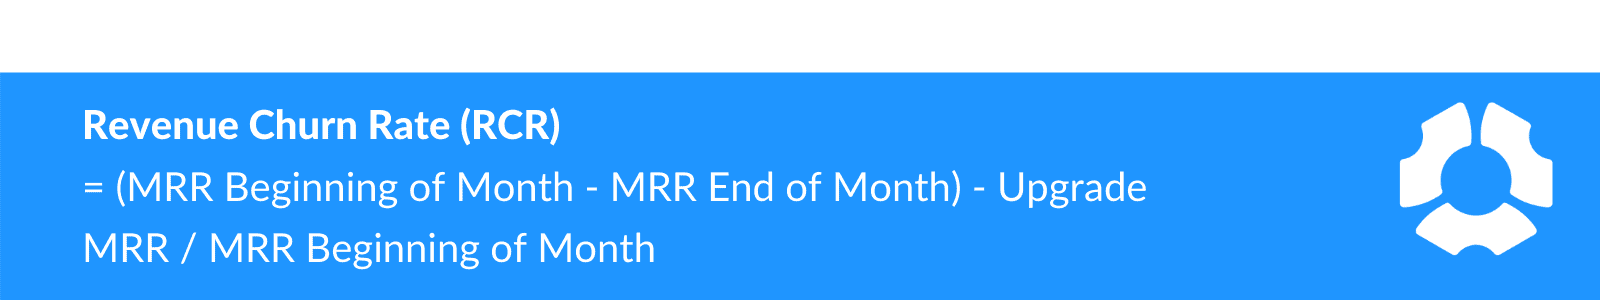 Revenue churn rate (RCR) formula